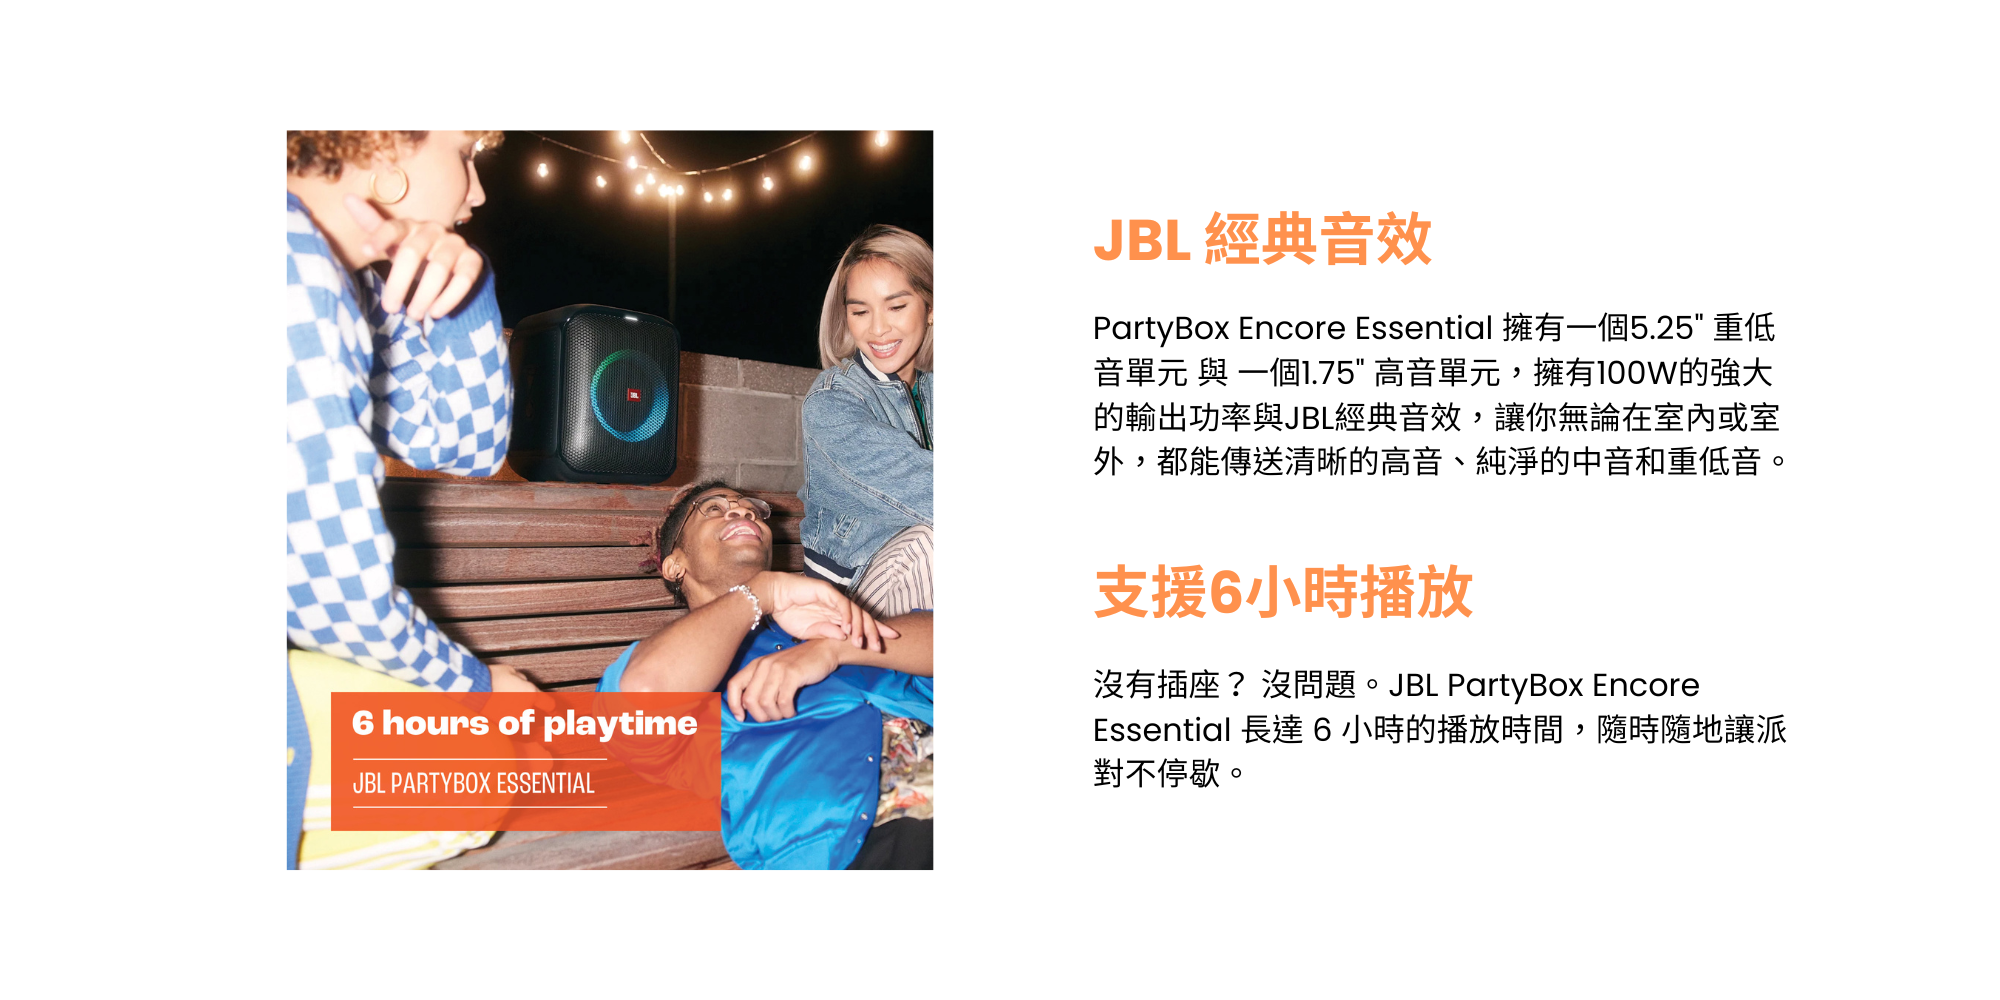 JBL Partybox Encore Essential